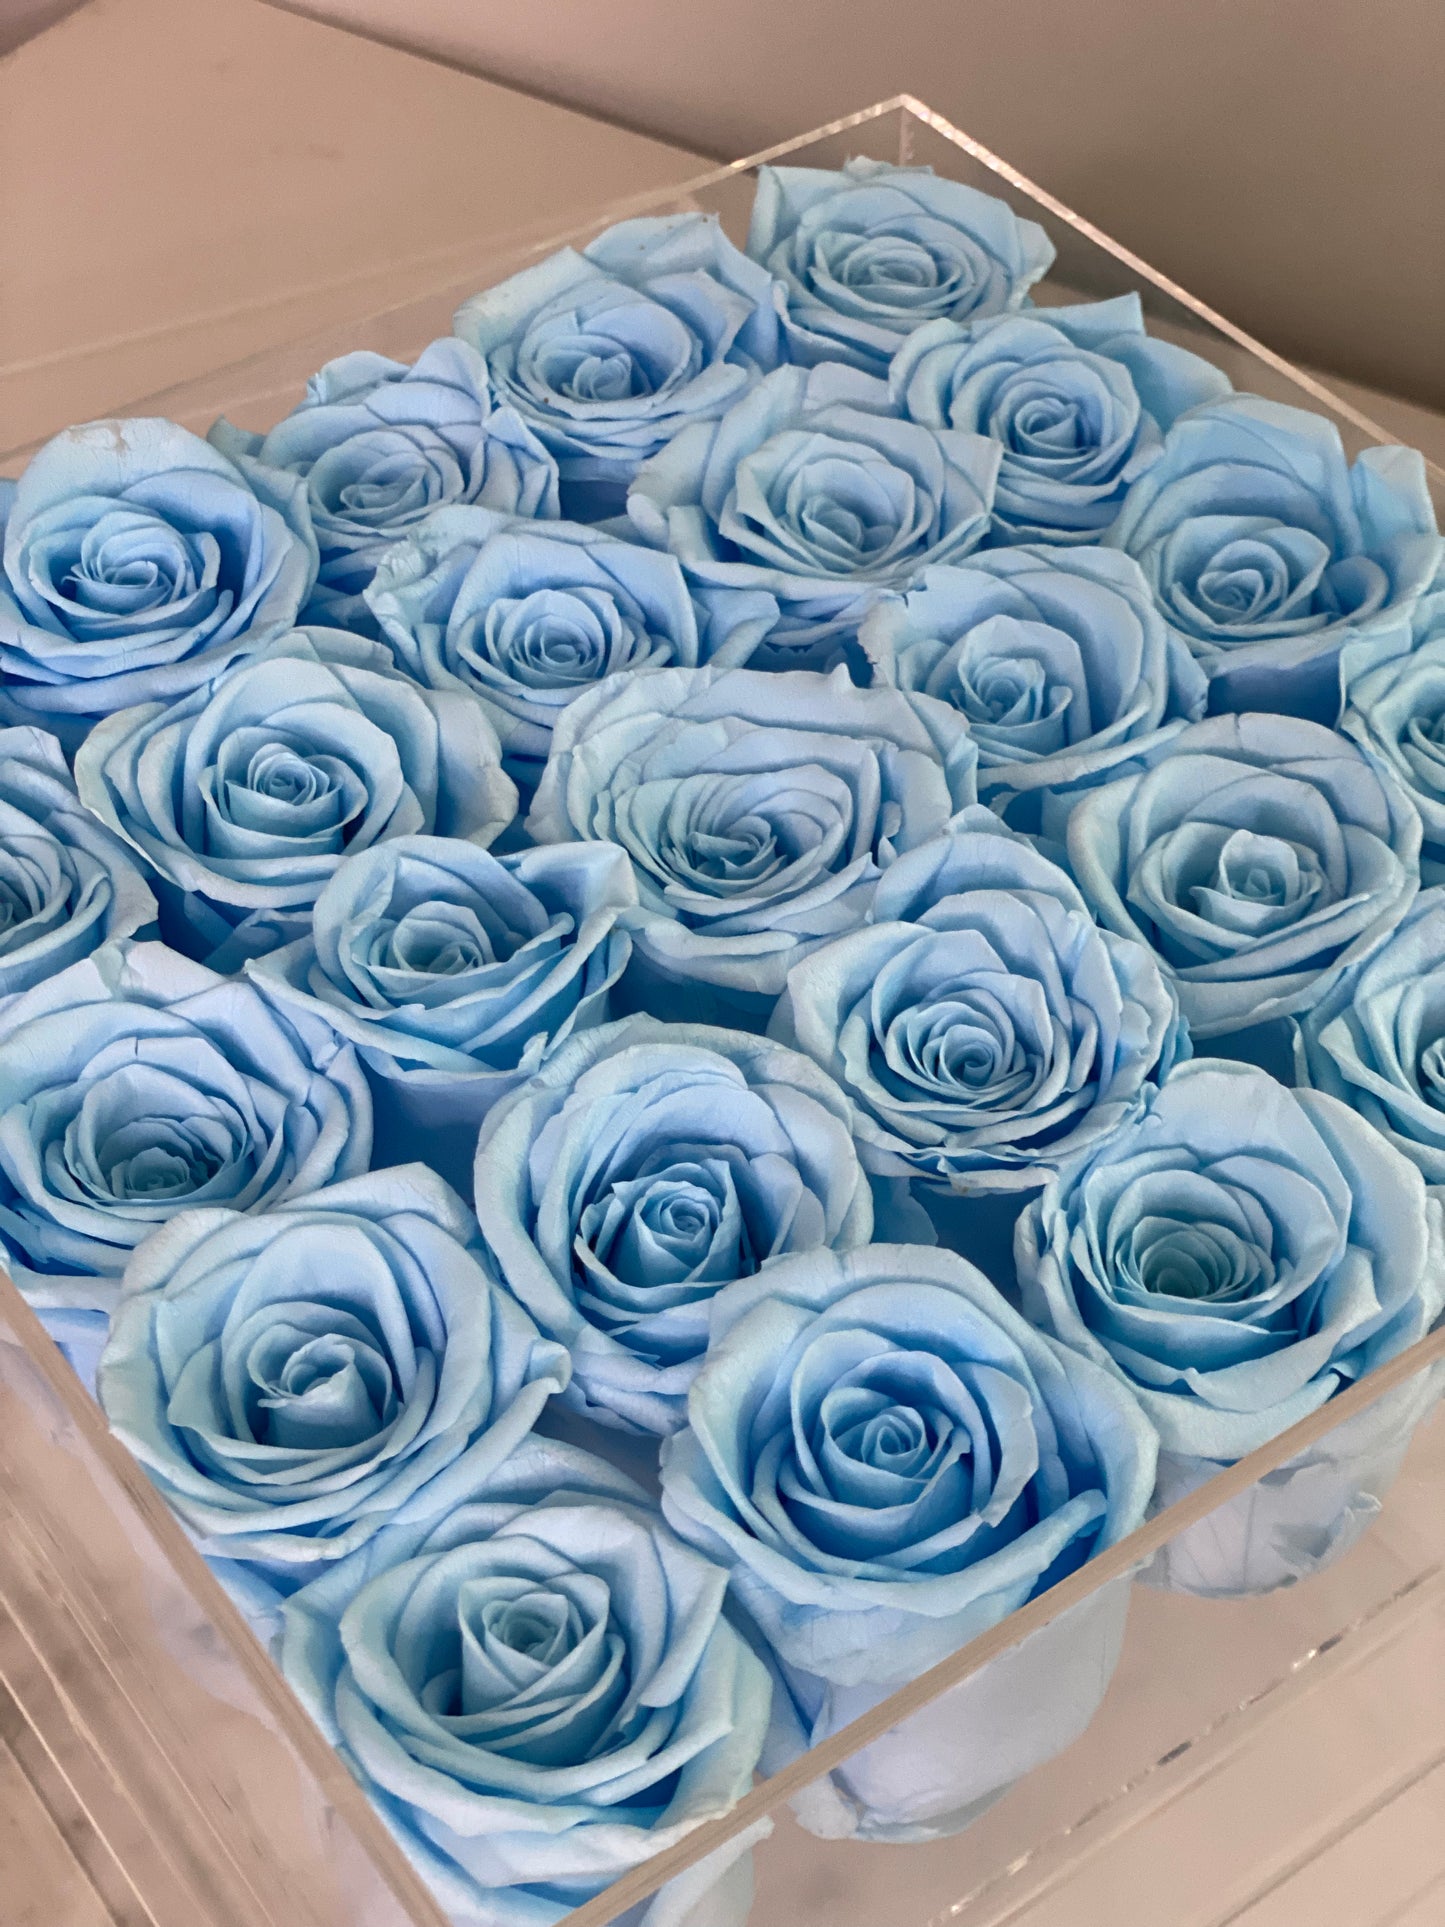 Twenty-five Preserved Roses in Clear Display